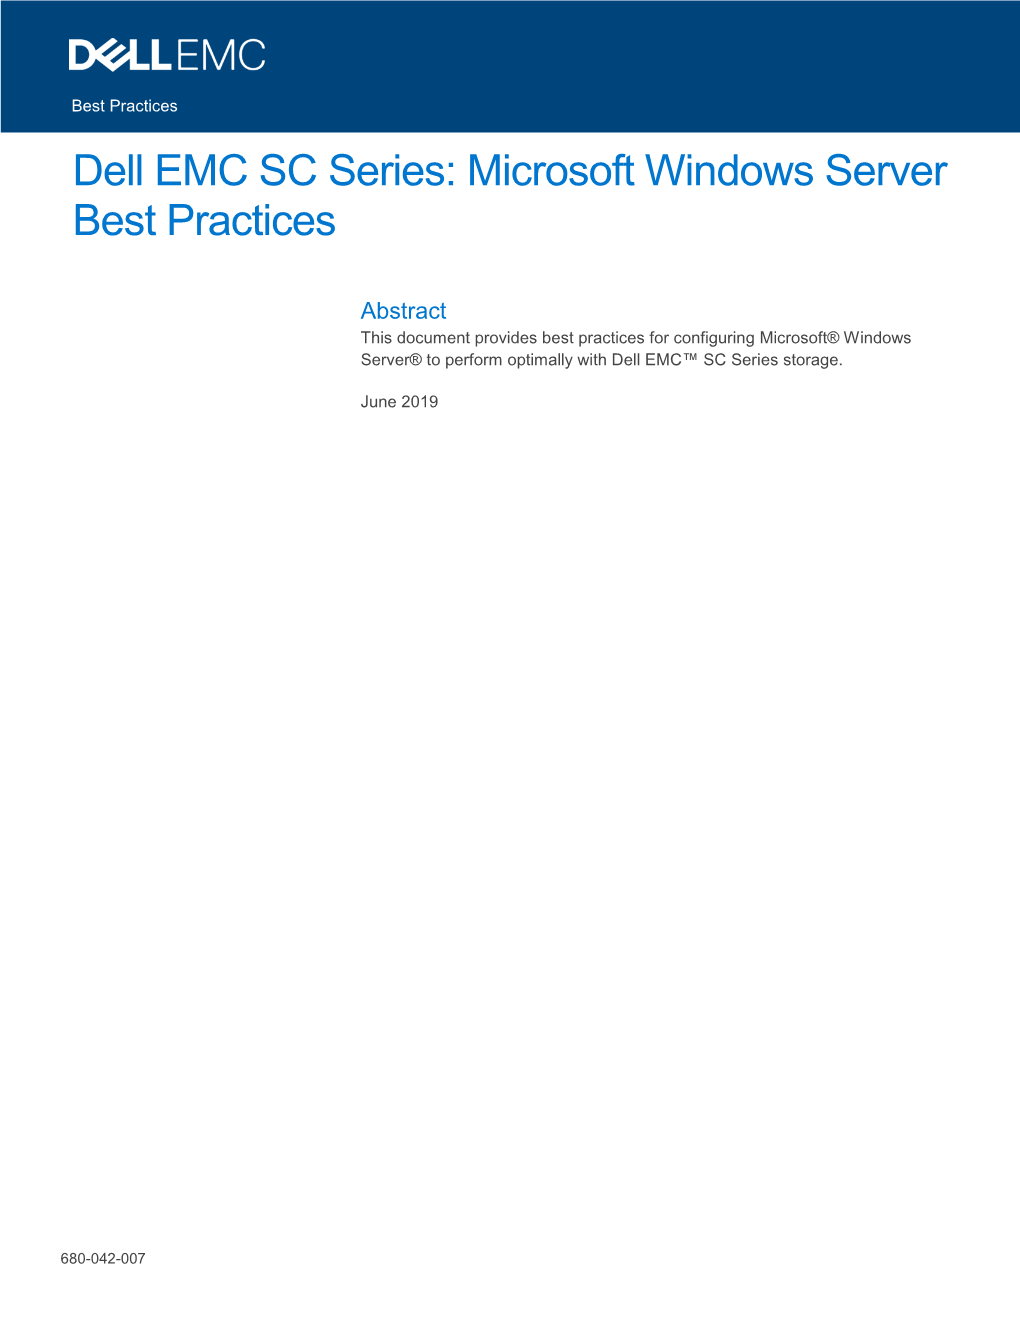 Dell EMC SC Series: Microsoft Windows Server Best Practices